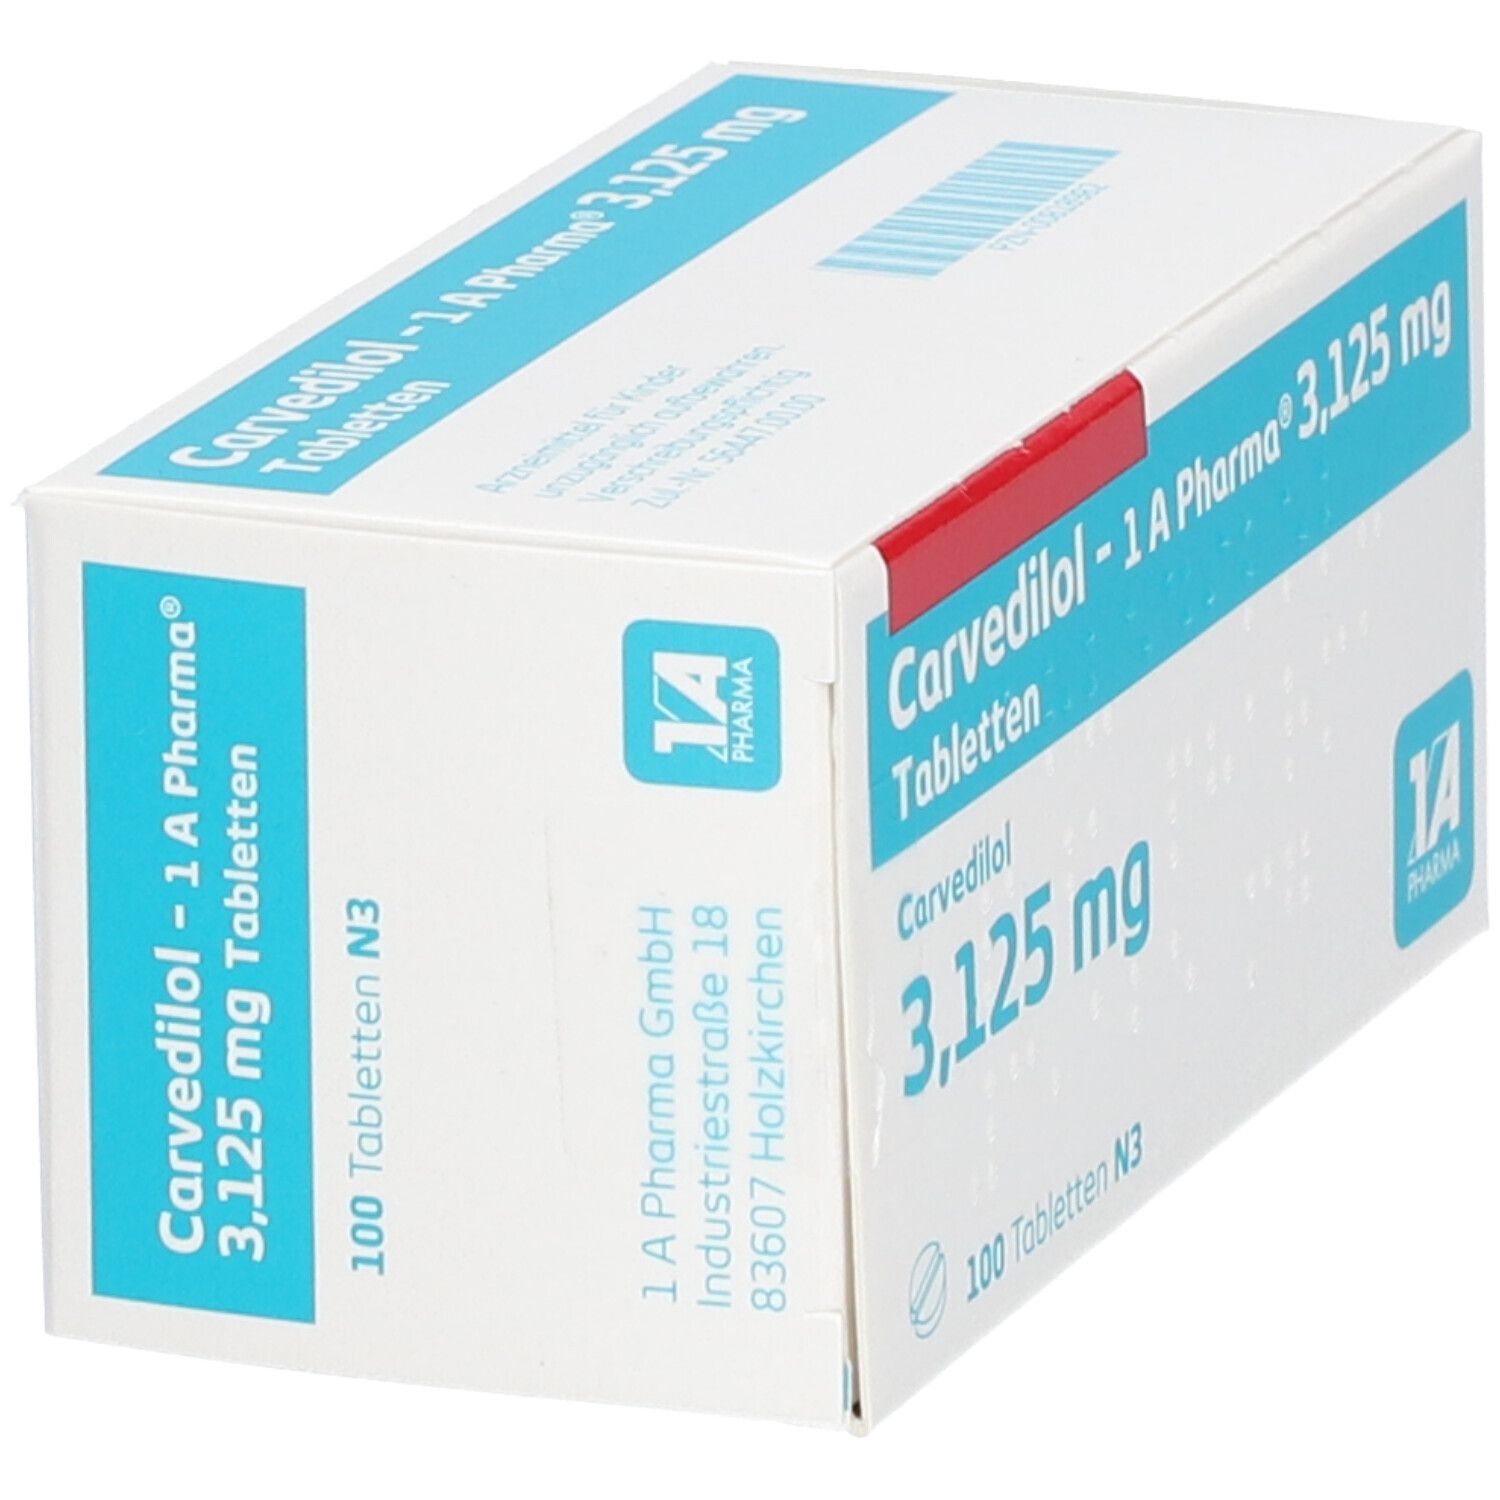 Carvedilol 1A Pharma® 3.125